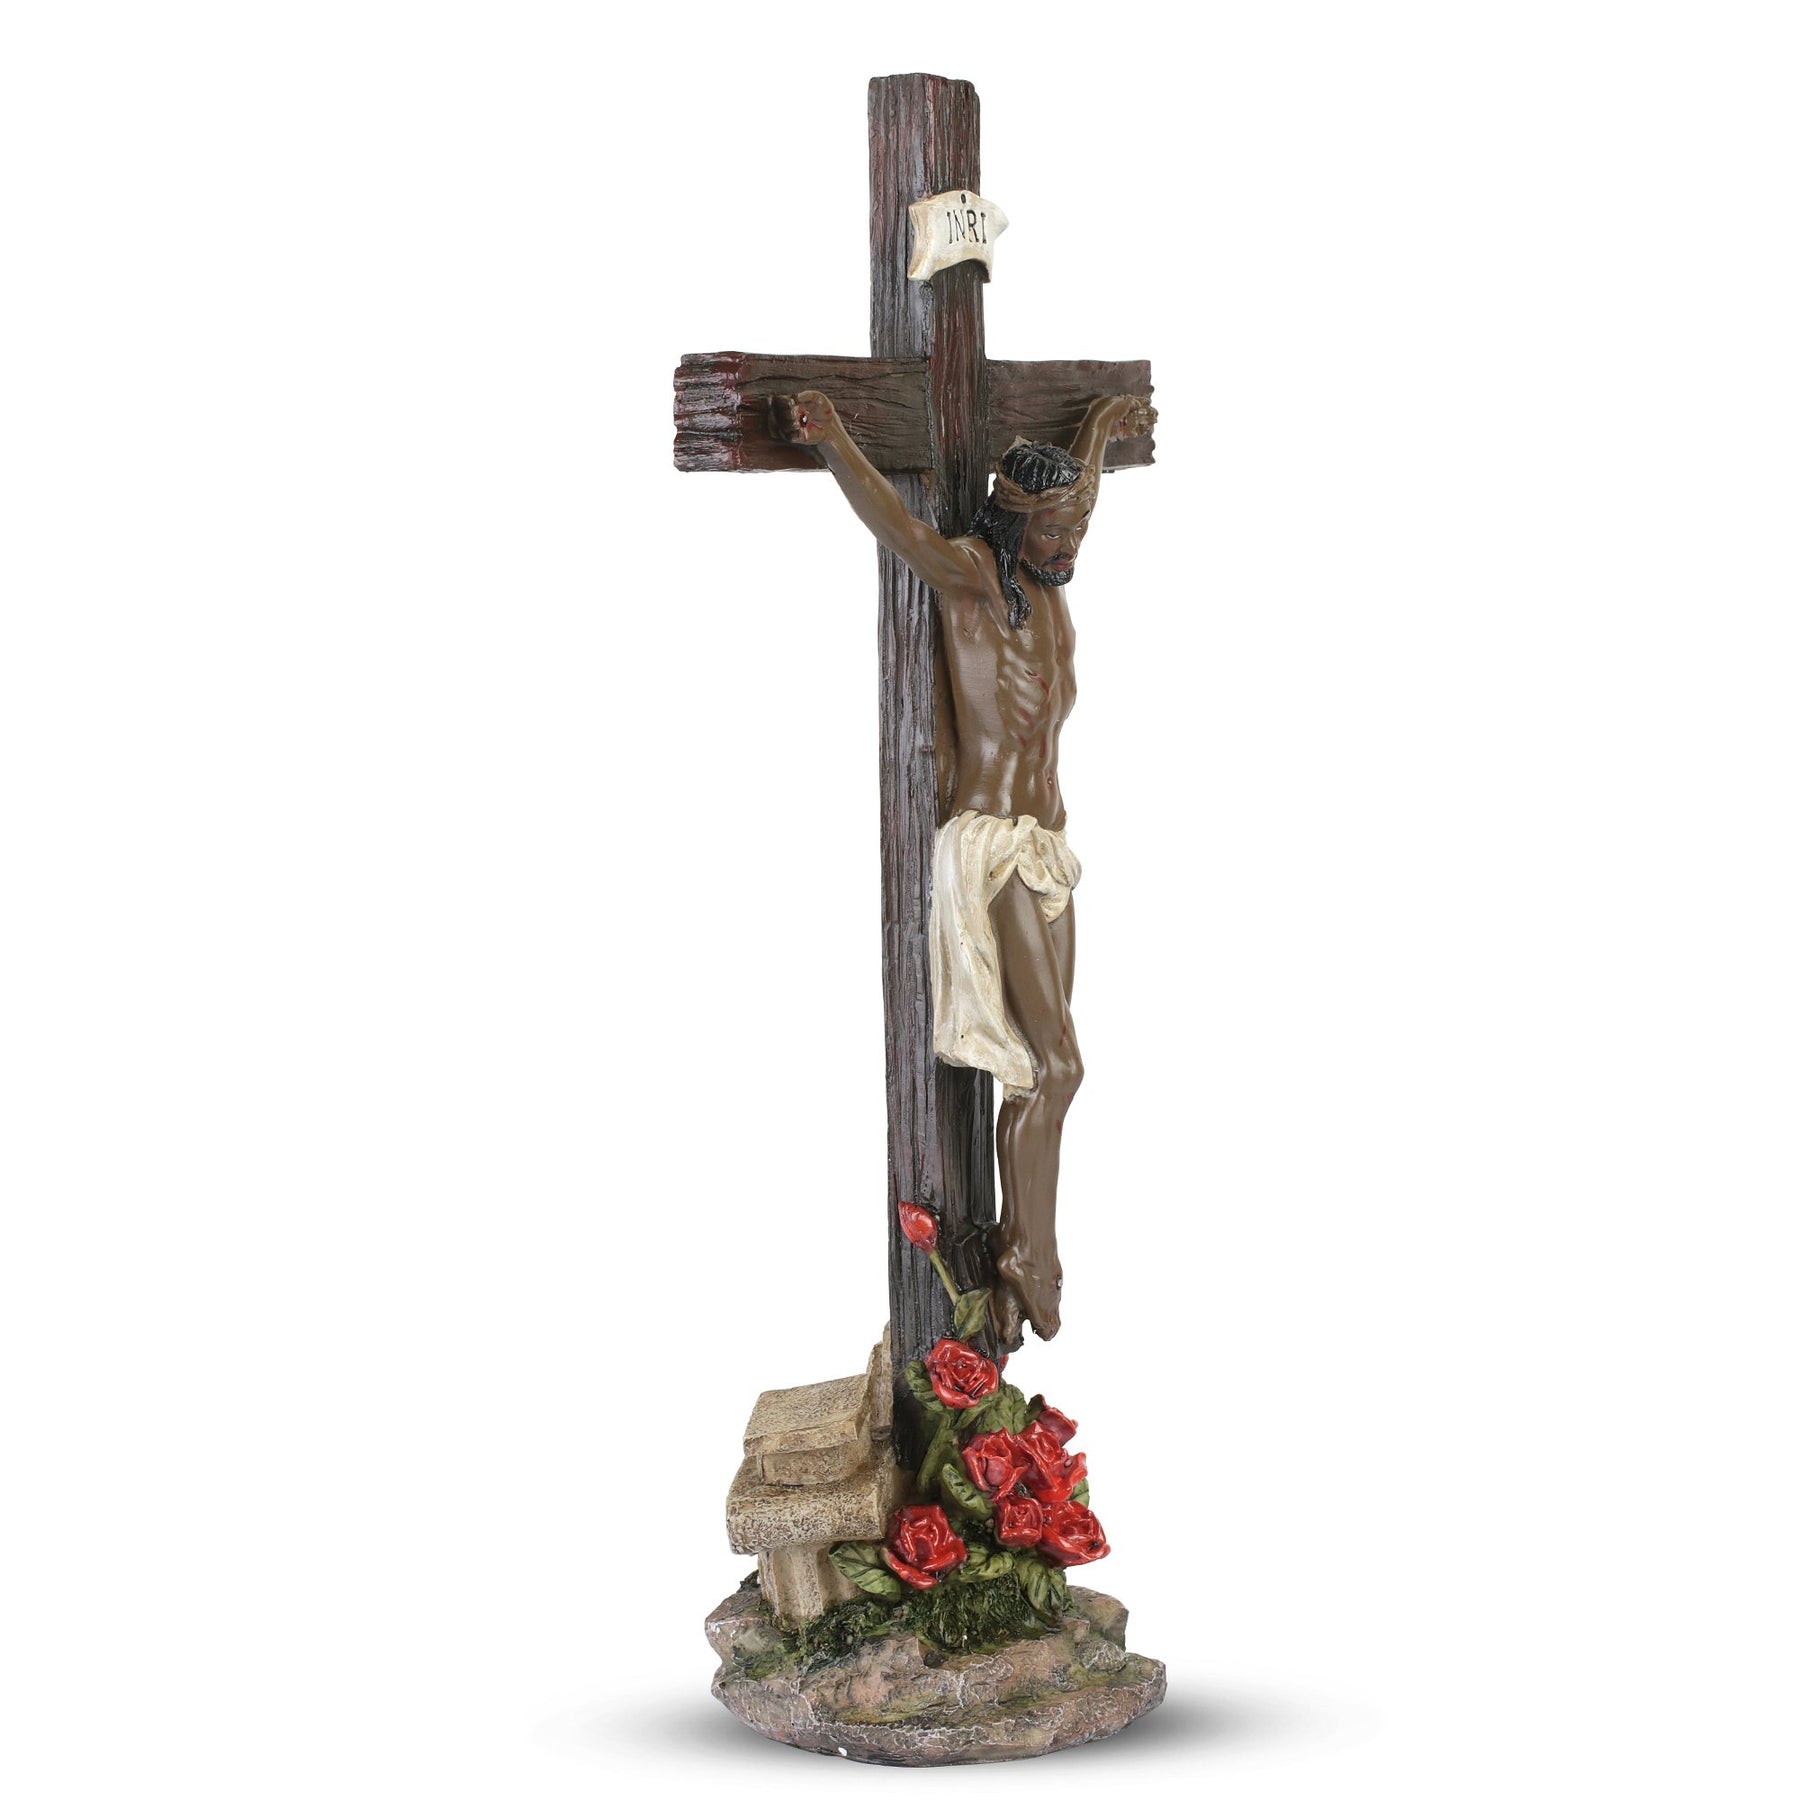 2 of 3: The Ultimate Sacrifice: African American Jesus Figurine (Side)